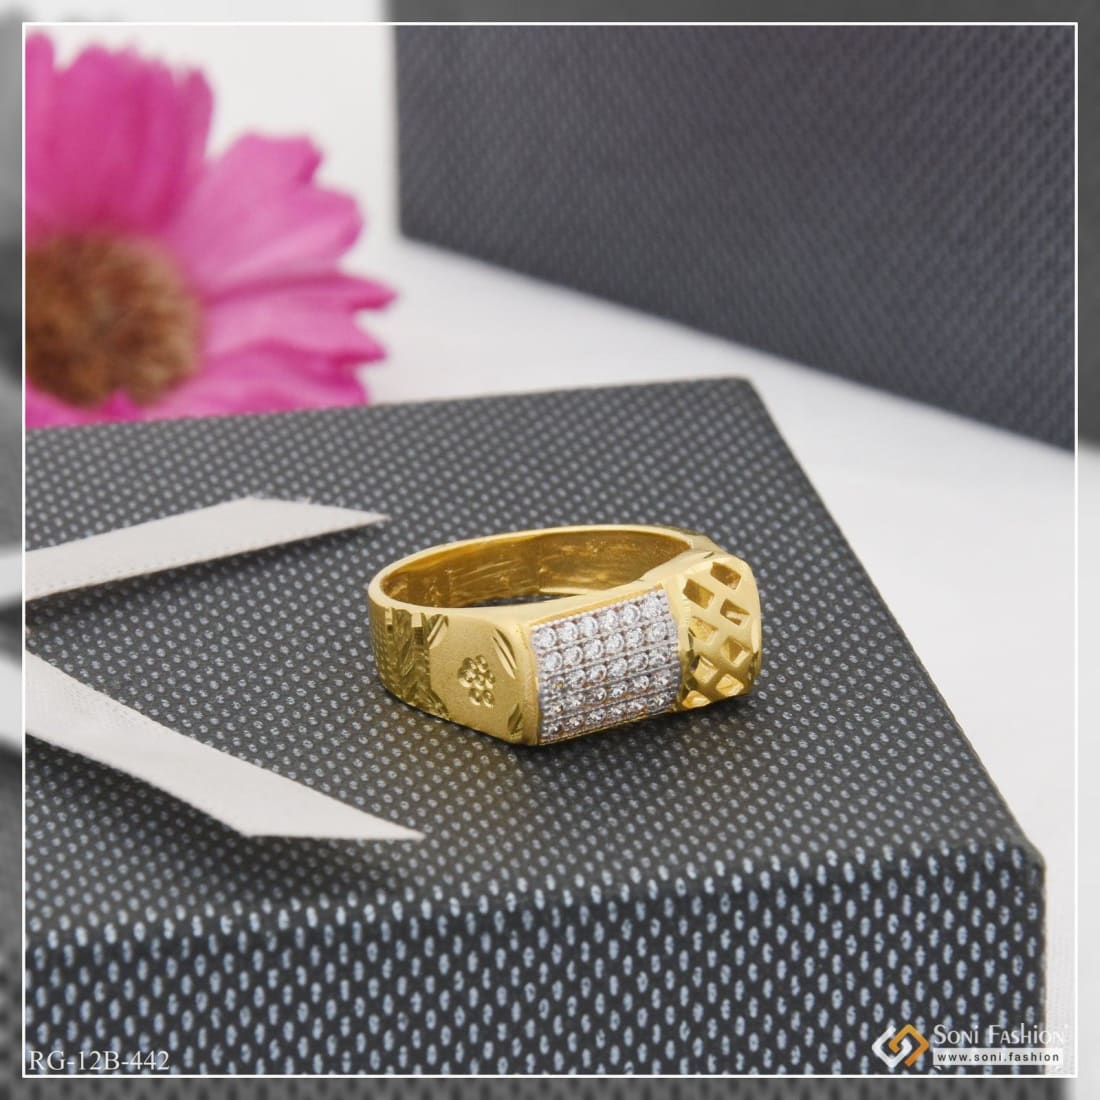 Most beautiful elegant gold ring designs | ruby ring designs | new gold  ring design |@FashionHub552 - YouTube